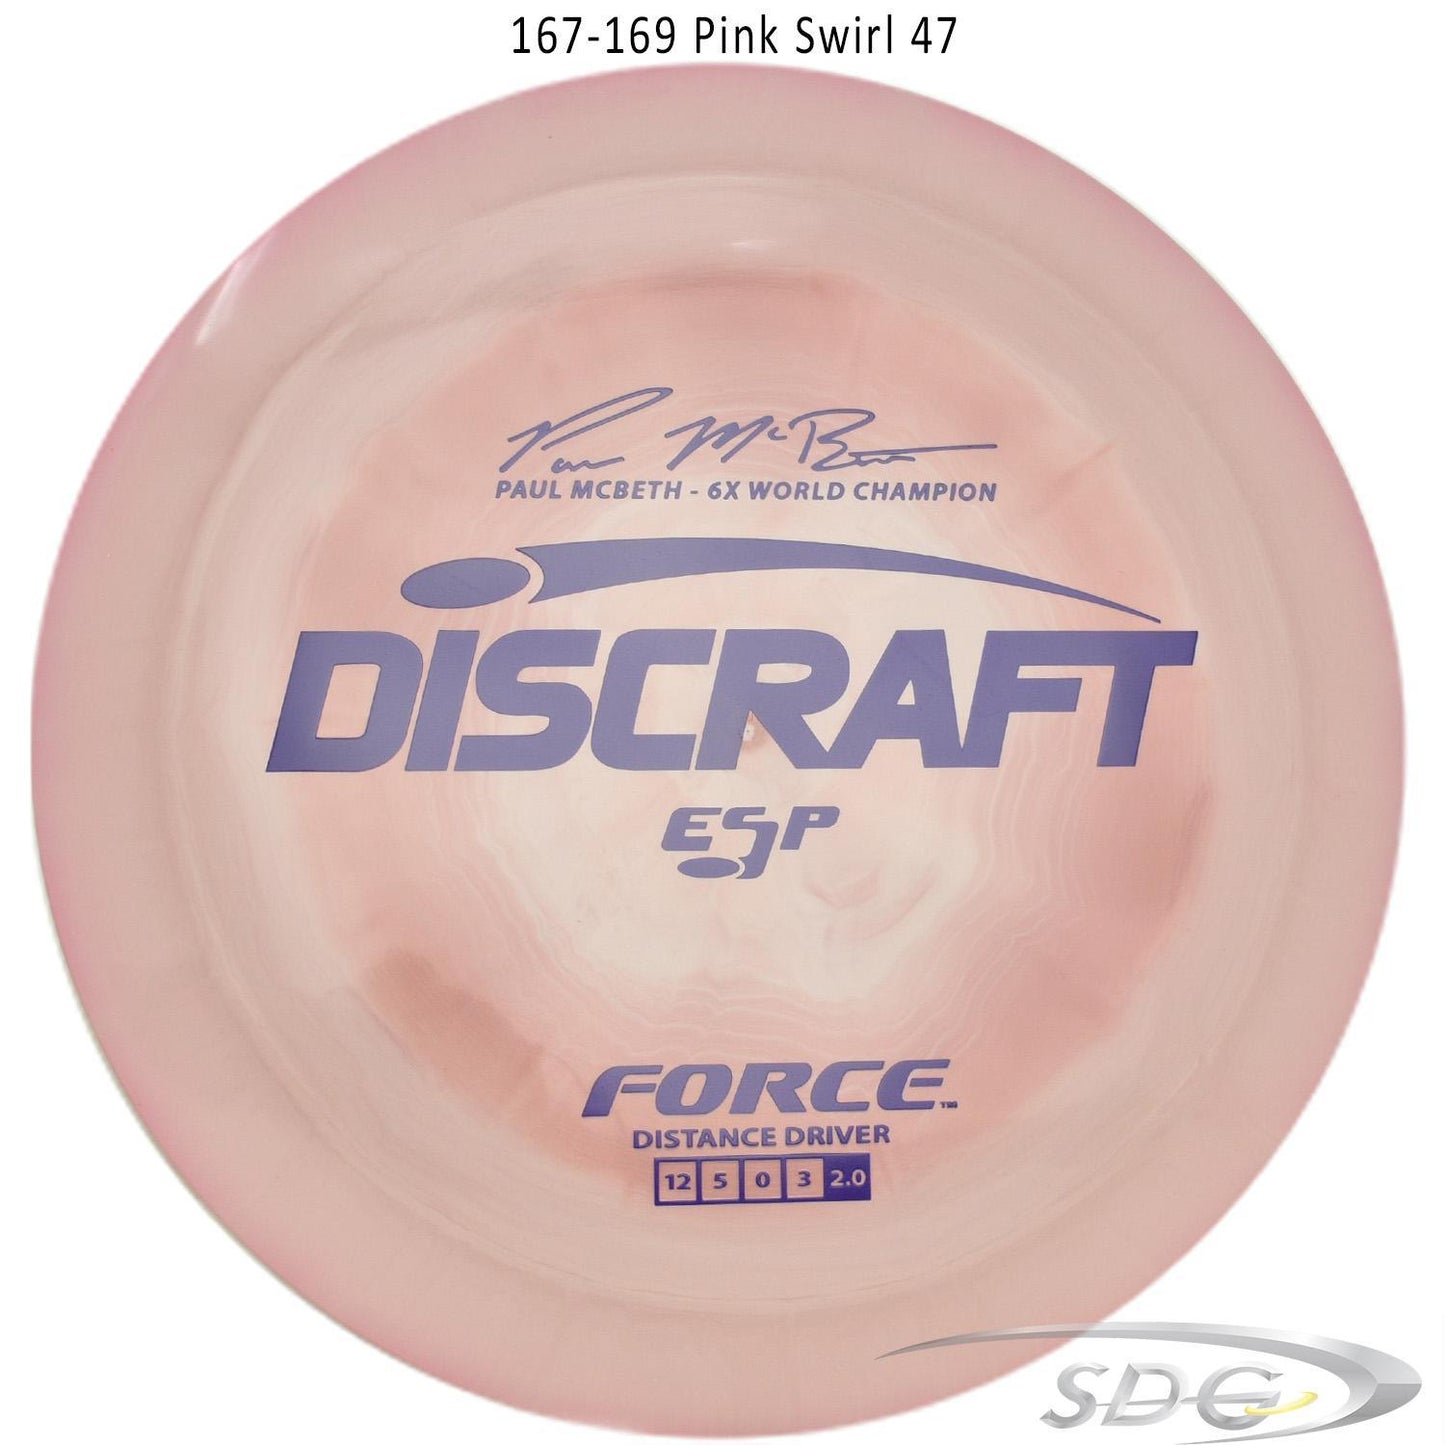 discraft-esp-force-6x-paul-mcbeth-signature-disc-golf-distance-driver-169-160-weights 167-169 White Swirl 47 